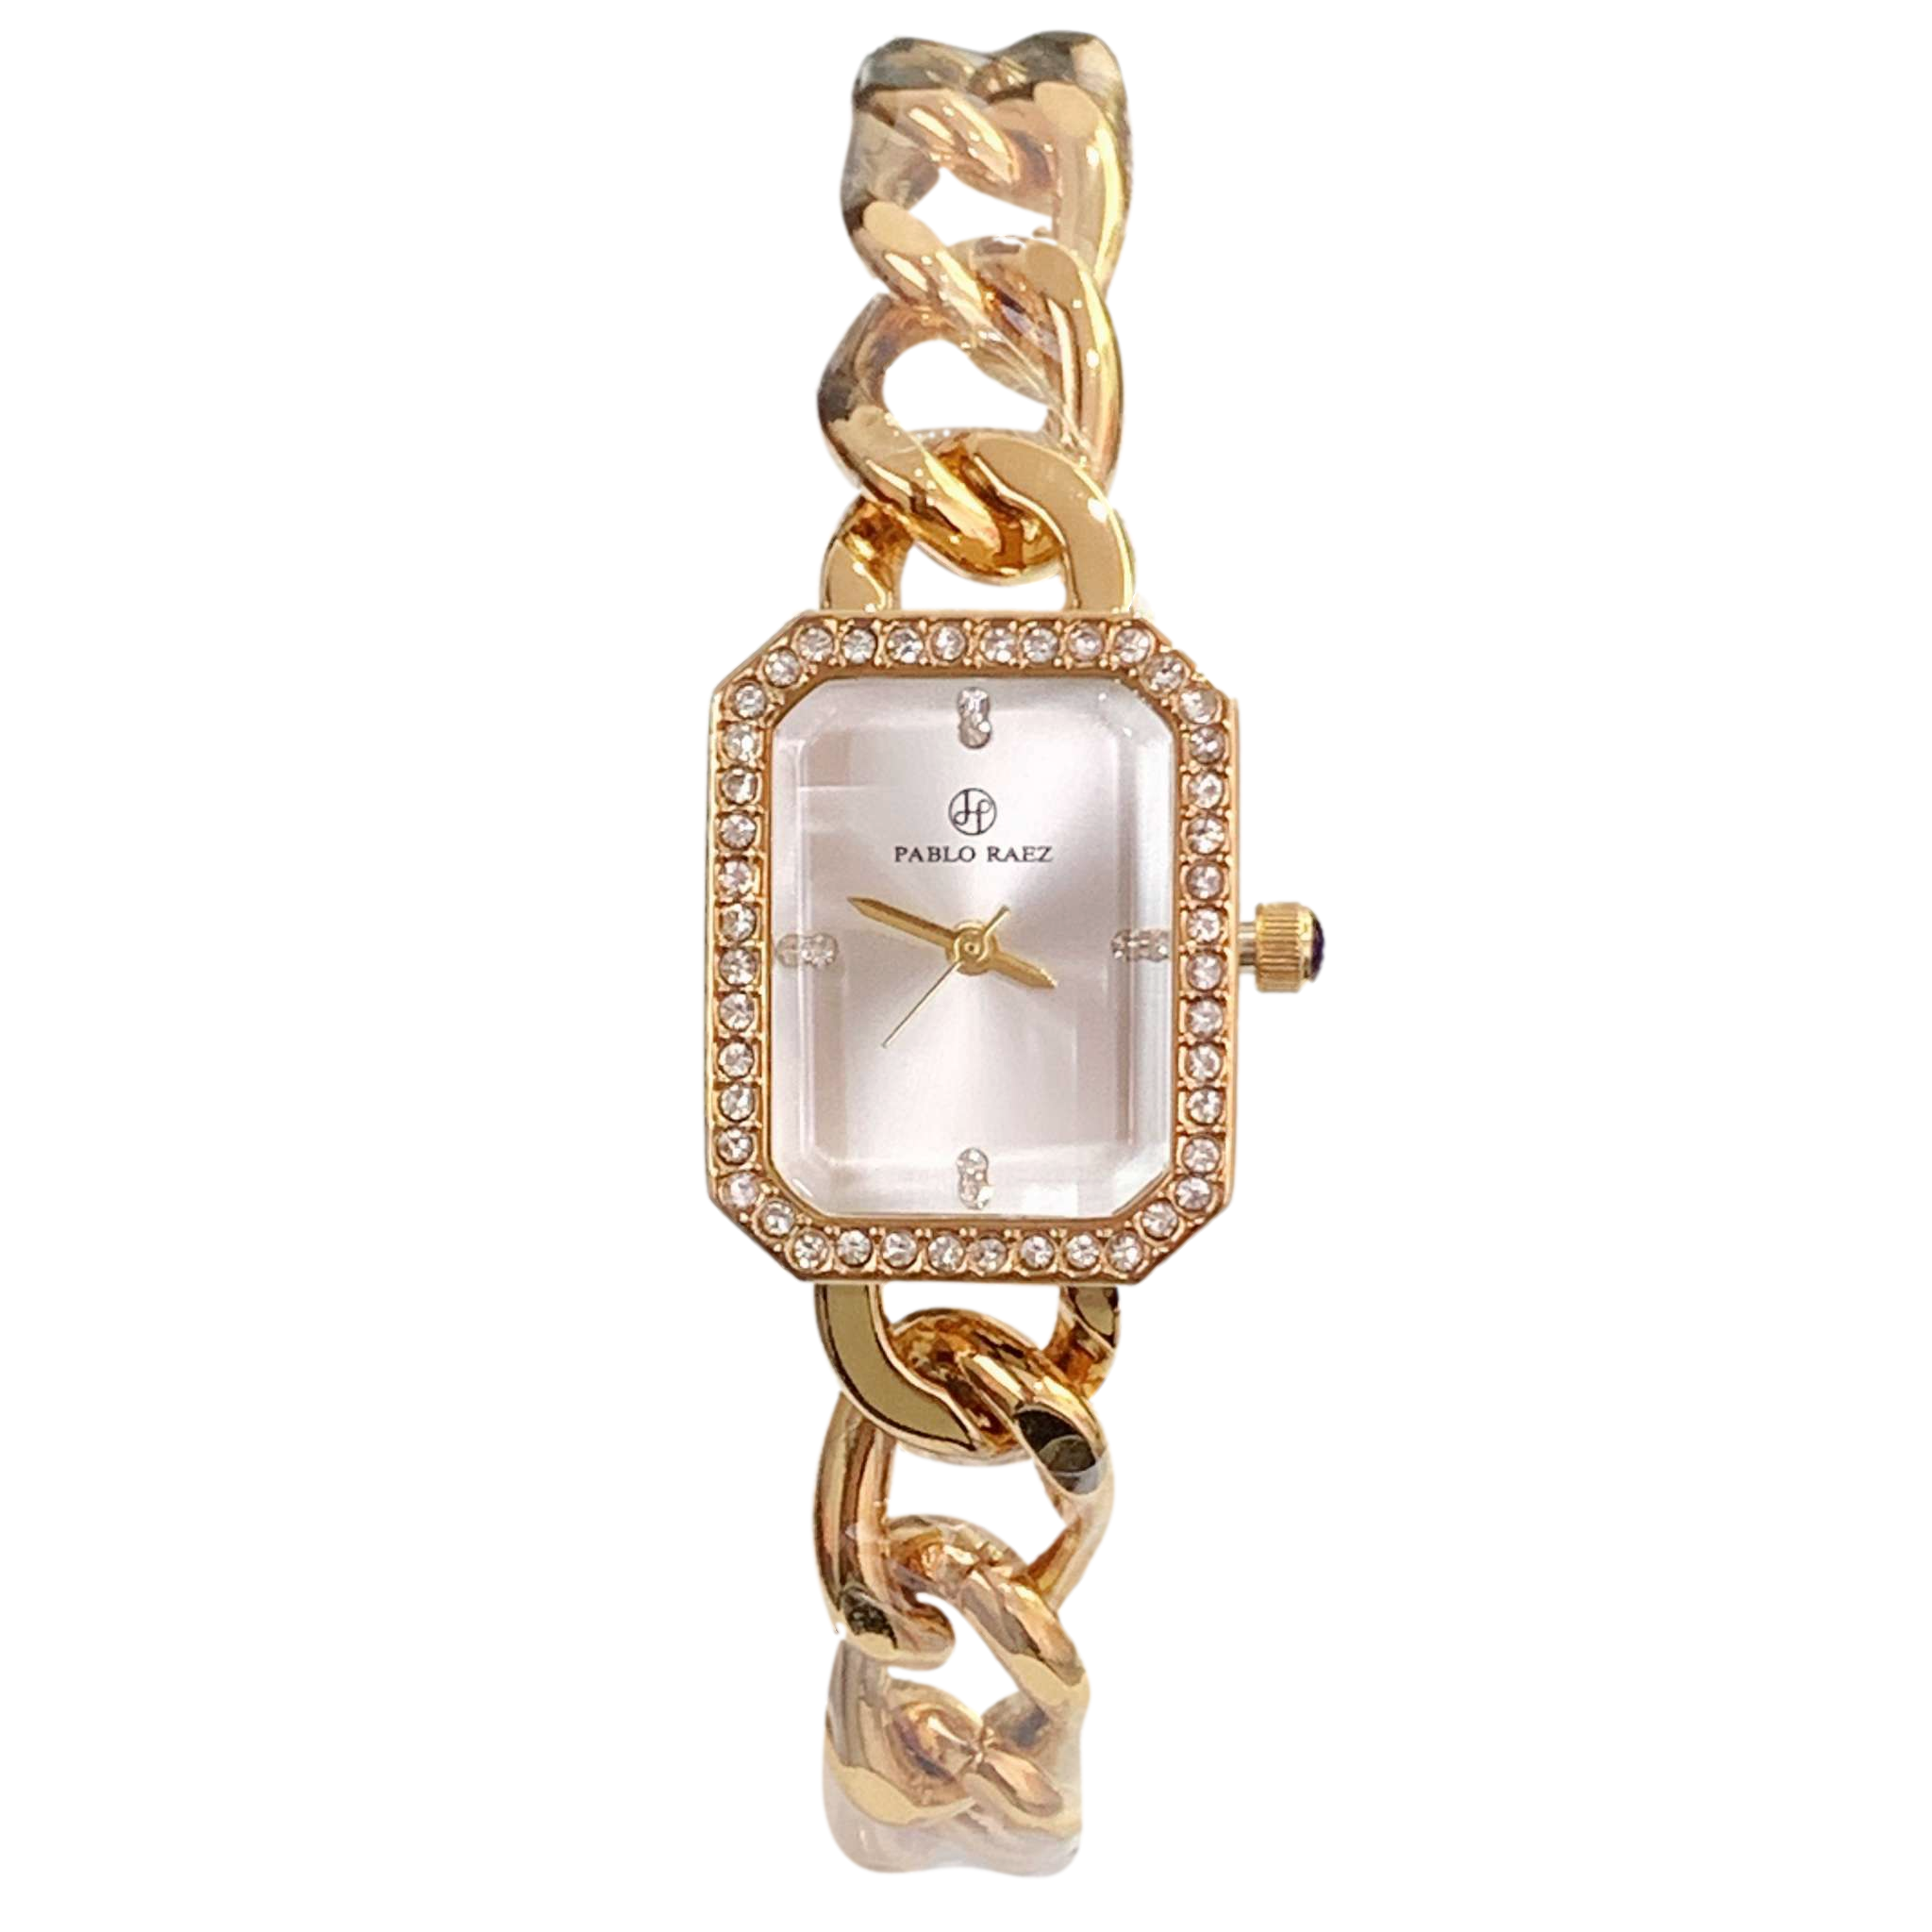 Pablo Raez Reloj Mujer Woman Diamond Watches Luxury Nurse Lady Casual Dress Female Fashion Wristwatch High Quality Gift For Girl